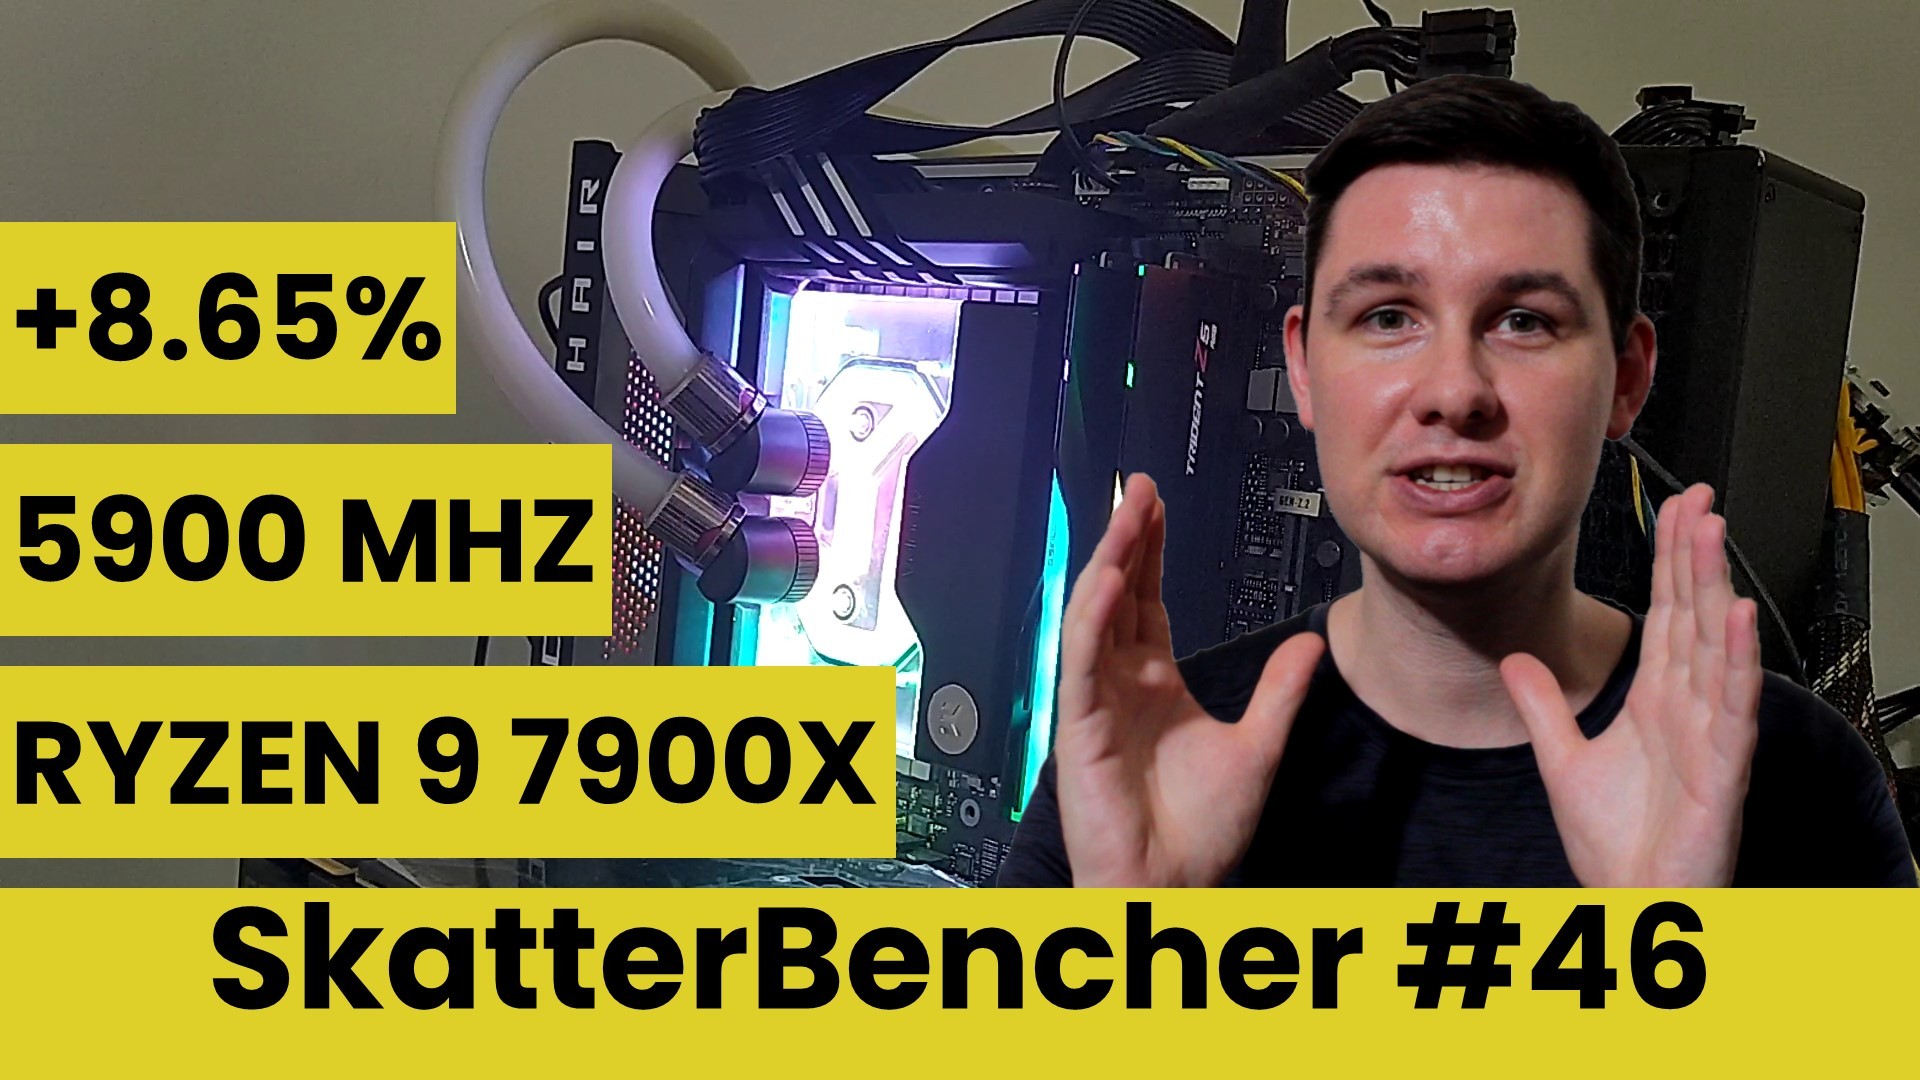 SkatterBencher #46: AMD Ryzen 9 7900X Overclocked to 5900 MHz